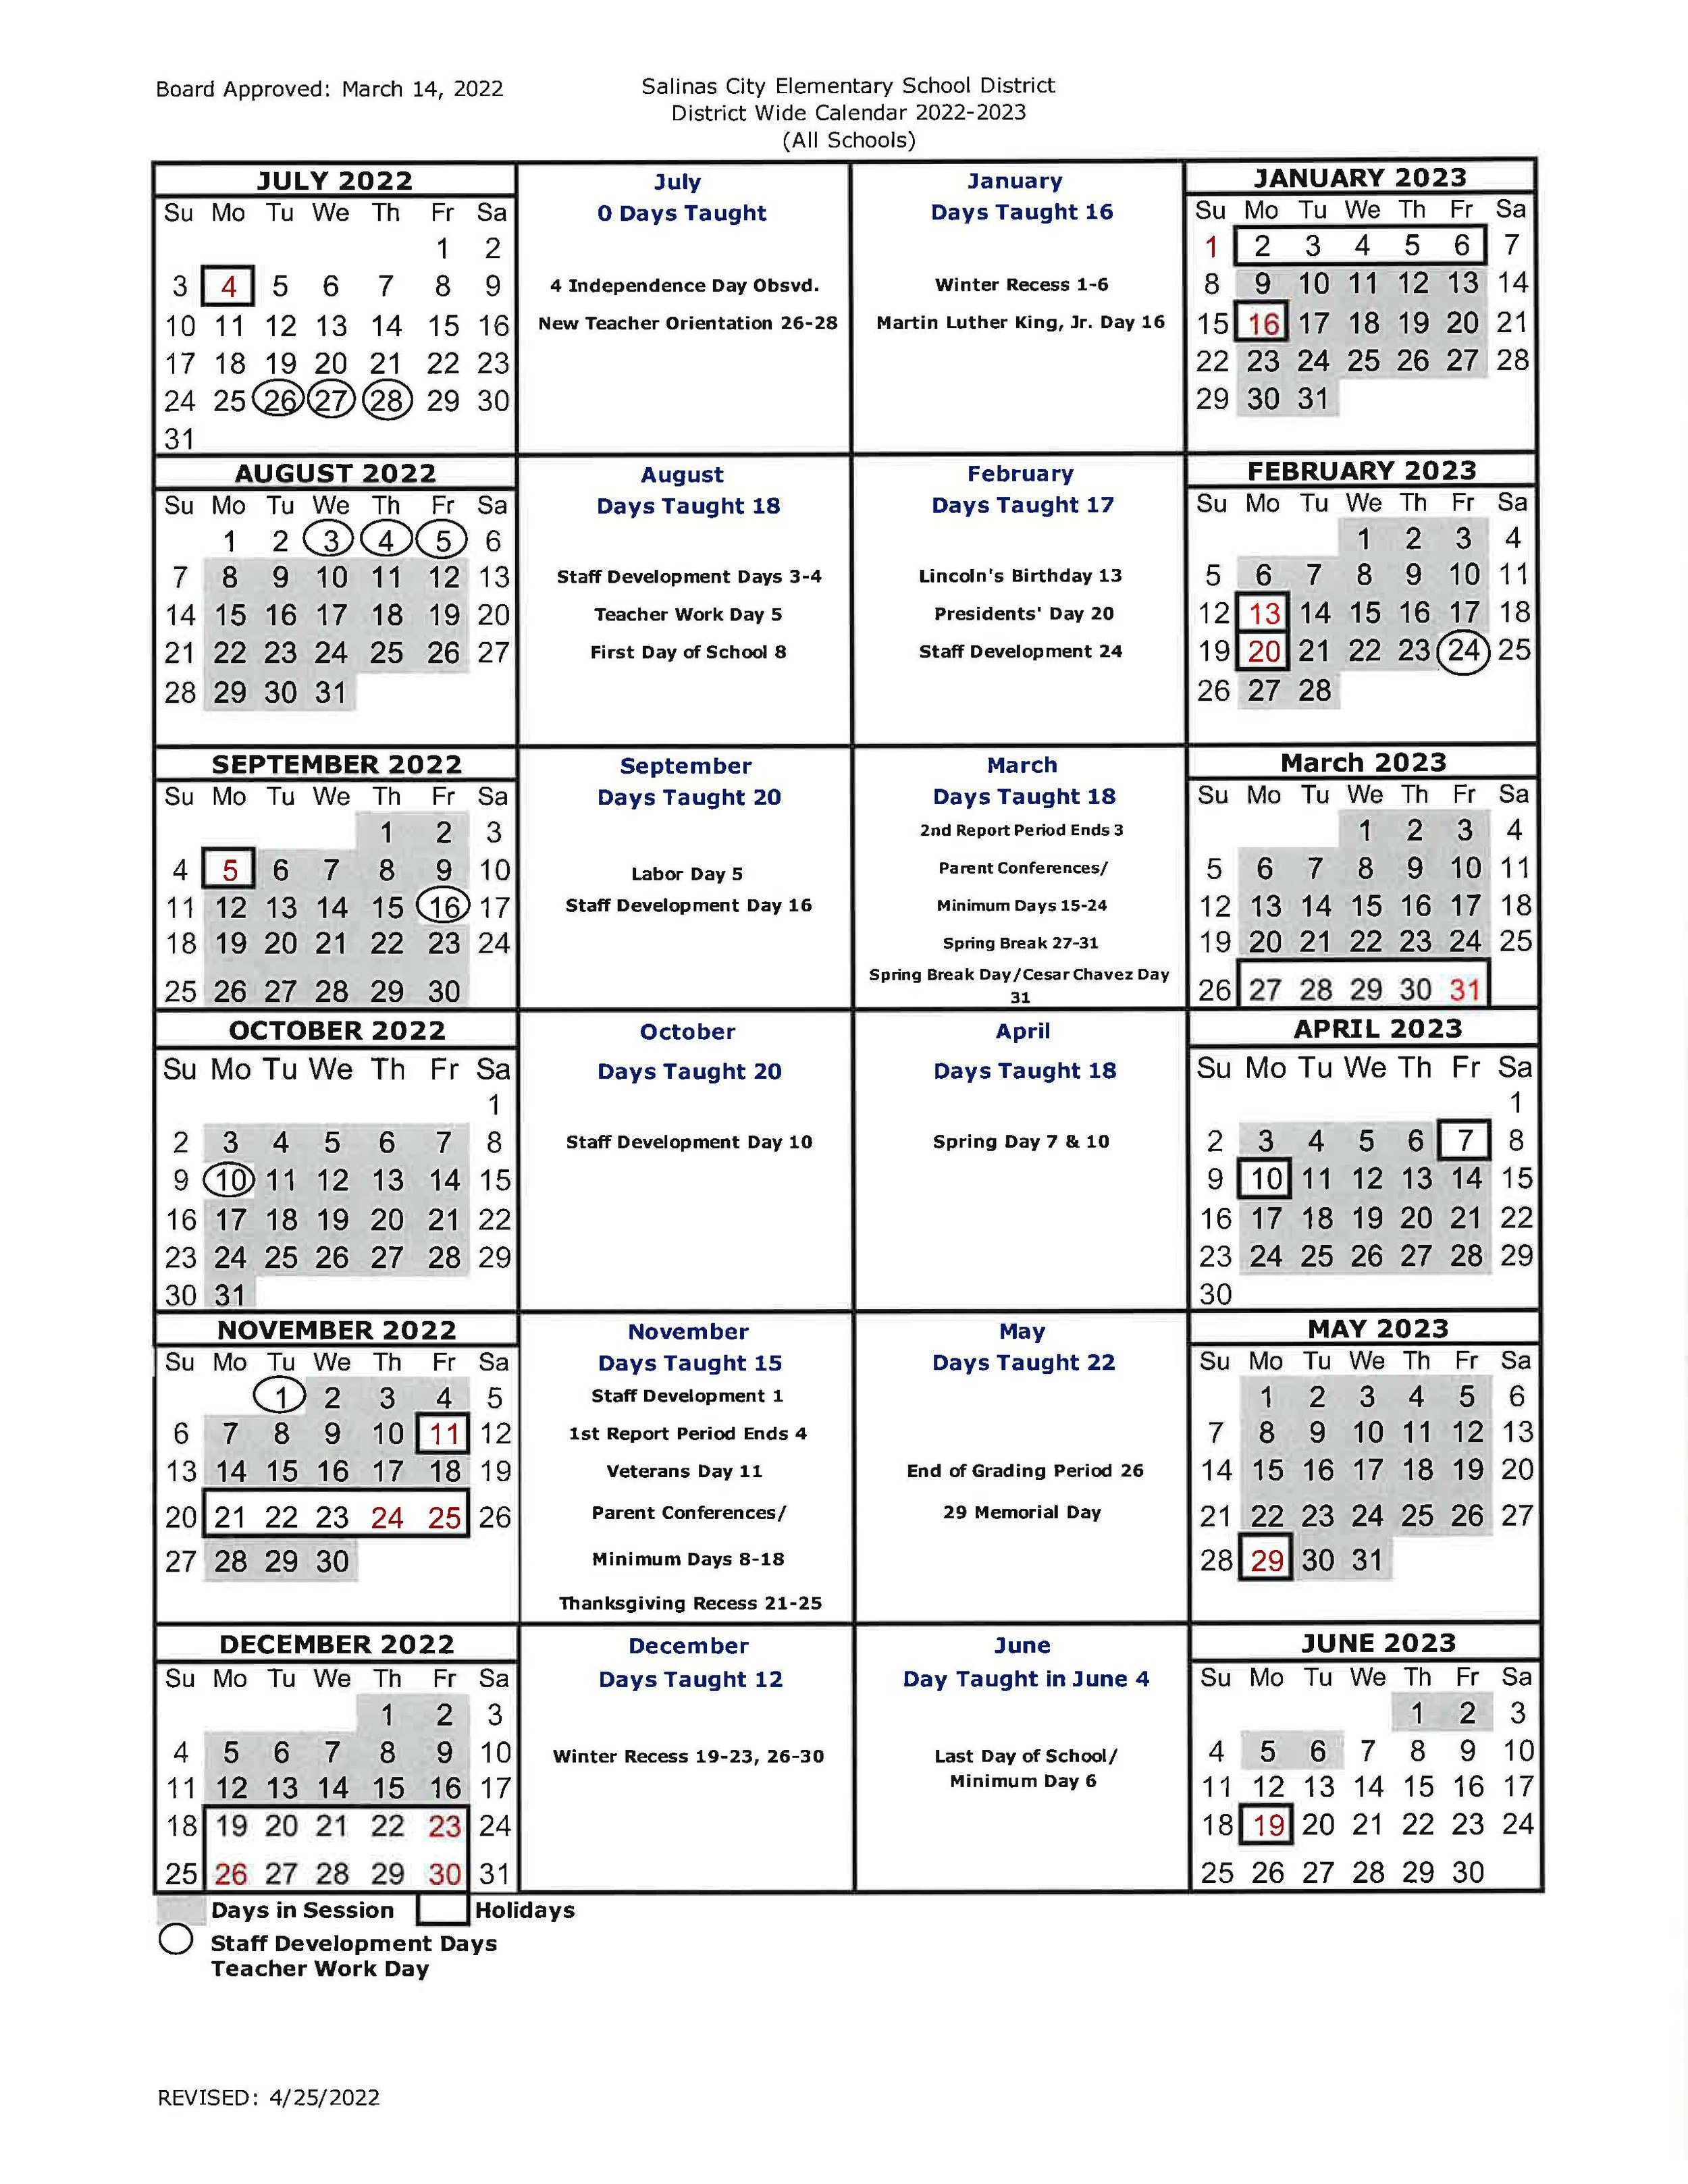 Salinas City Elementary School District Calendar 20232024